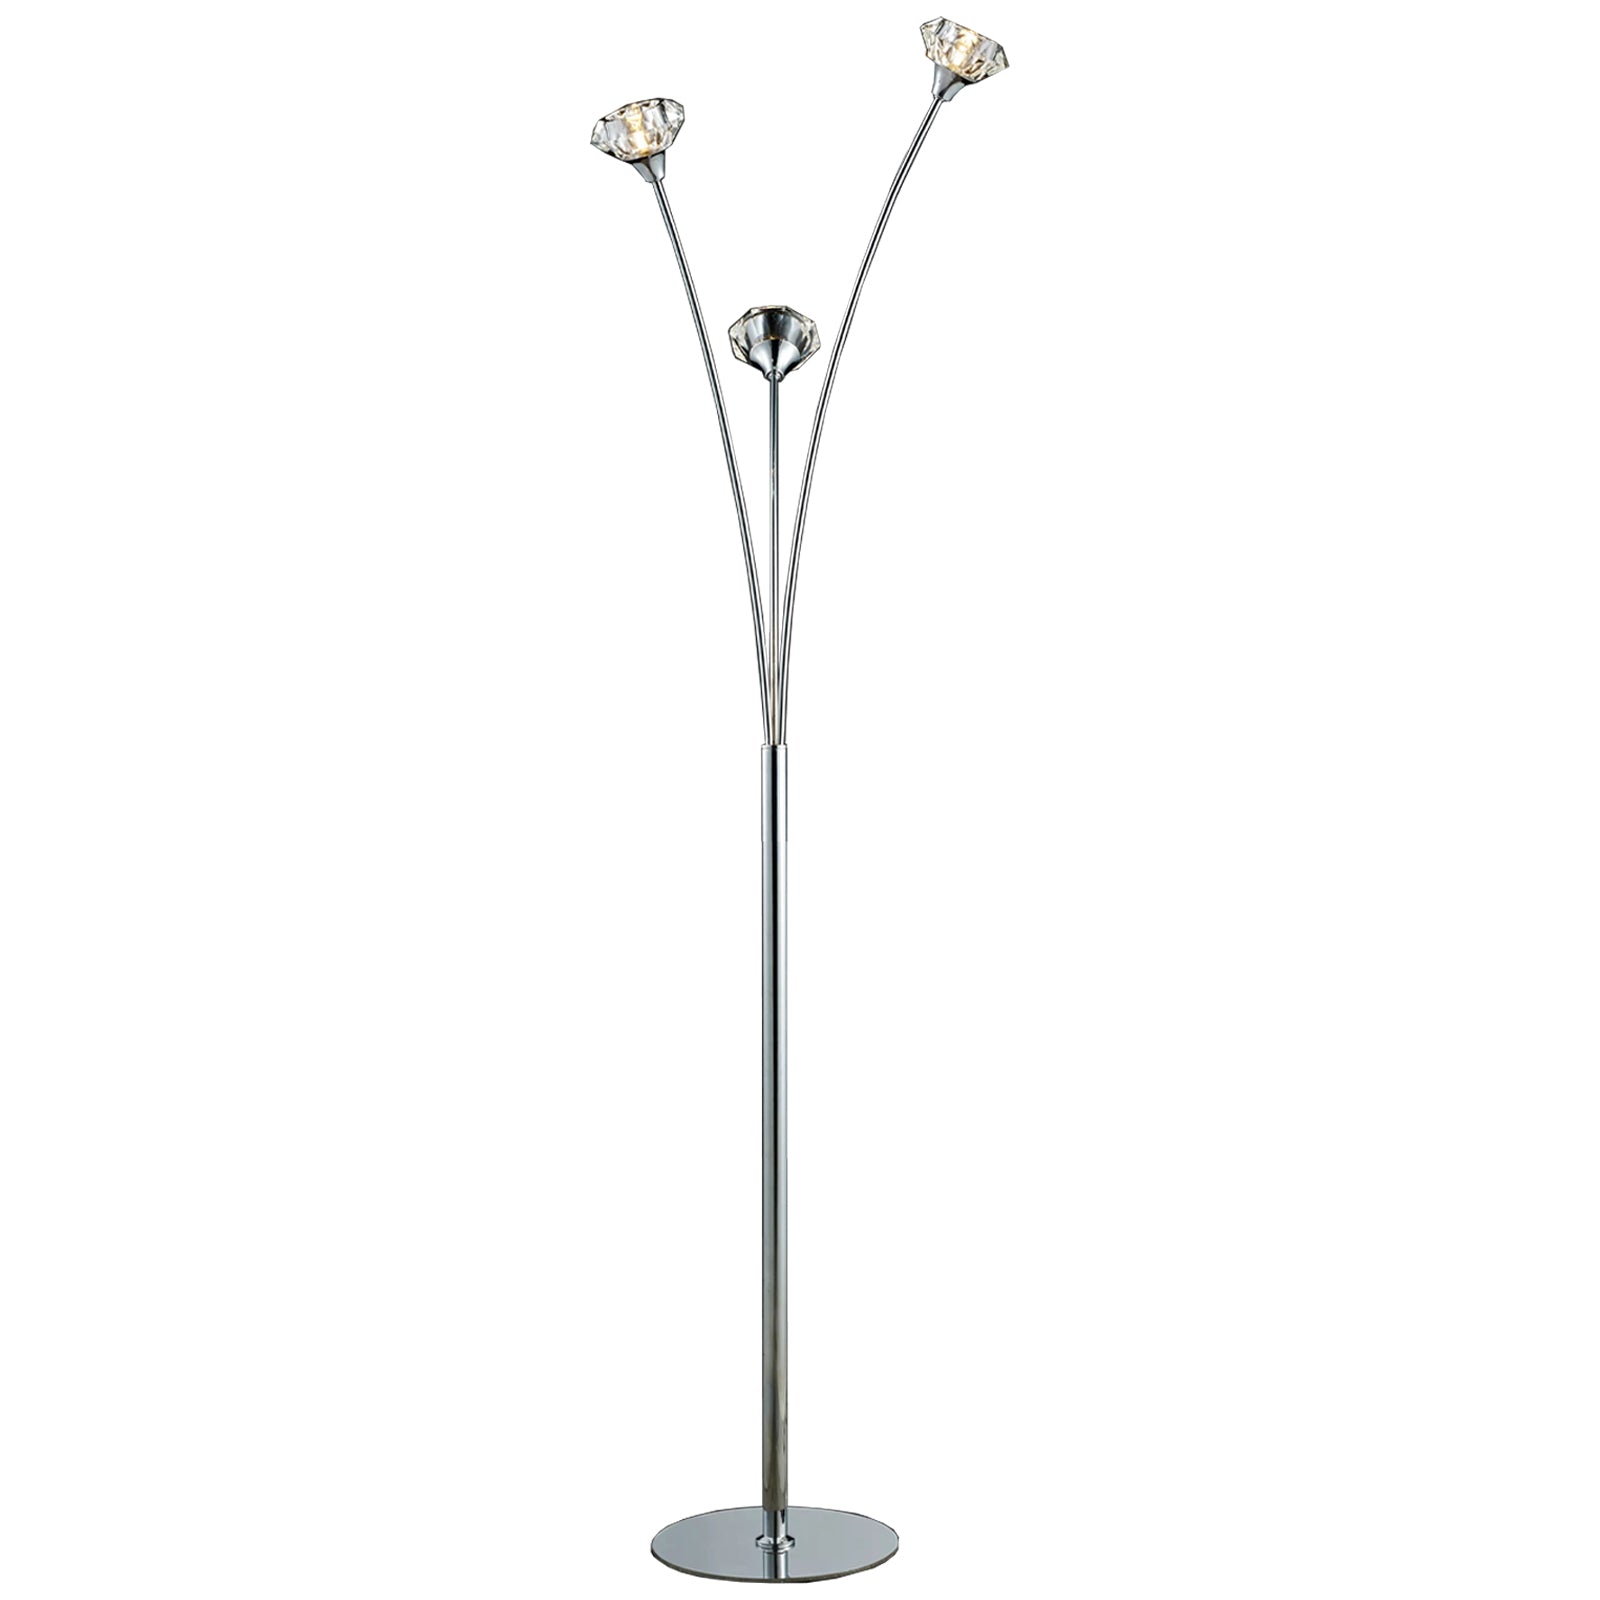 3 Light Floor Lamp, UK Plug Included, Polished Chrome Finish, Clear Glass Shades